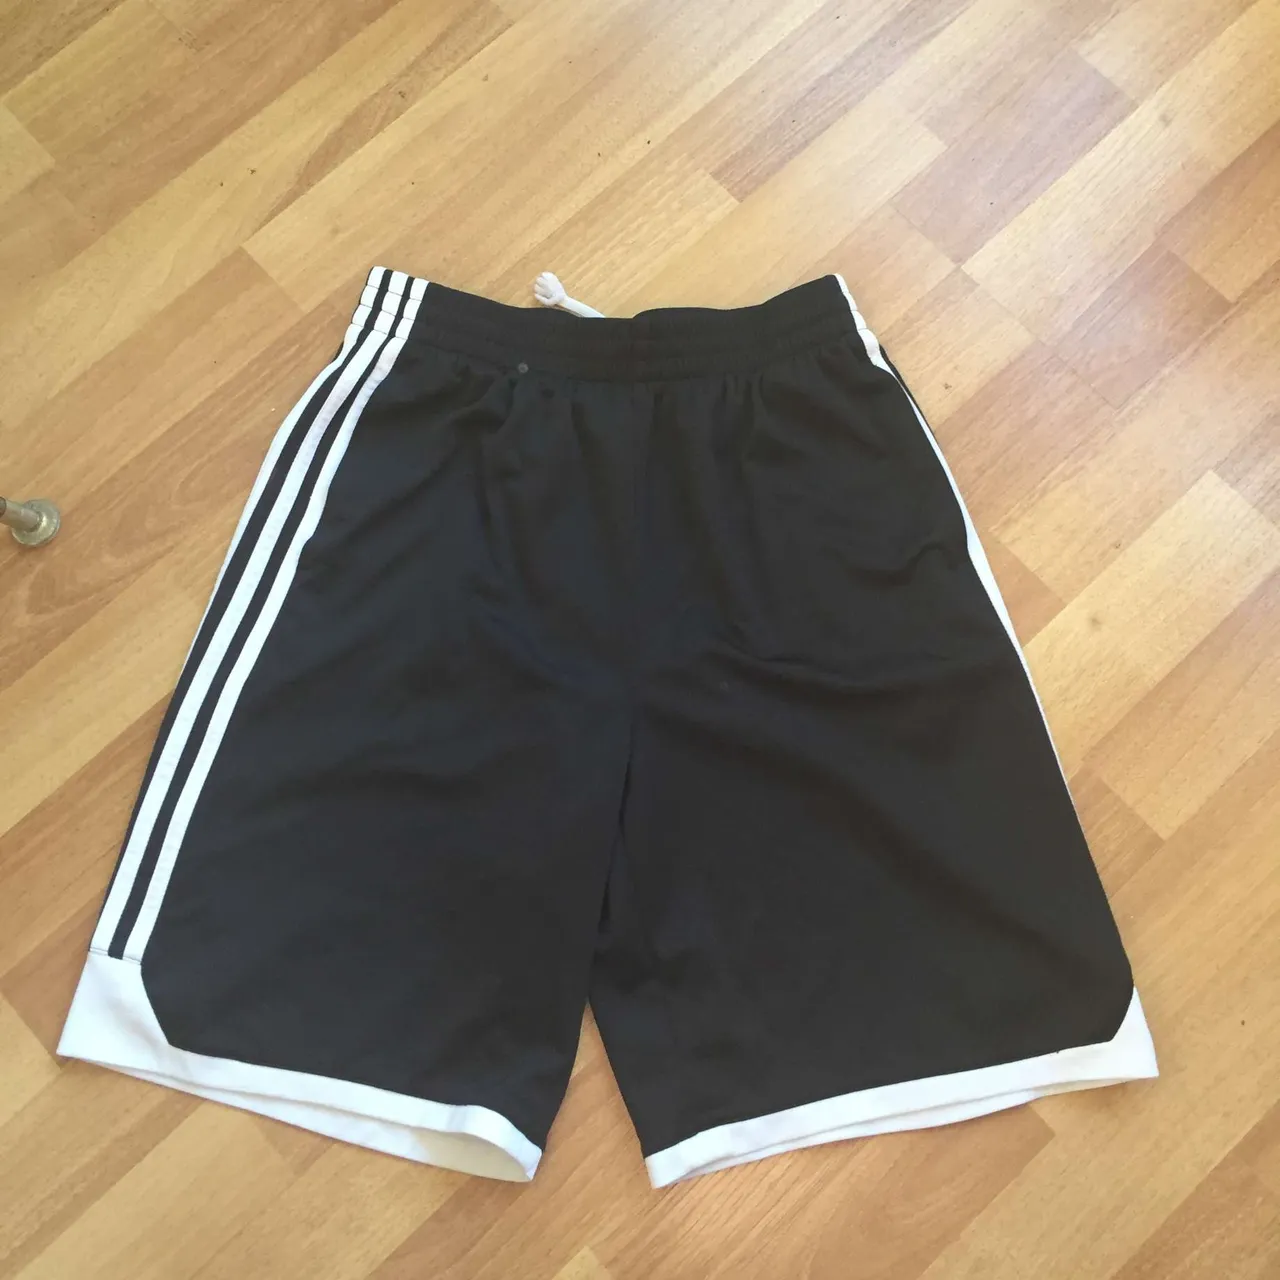 Adidas shorts size boy's L (women's S/M) photo 1